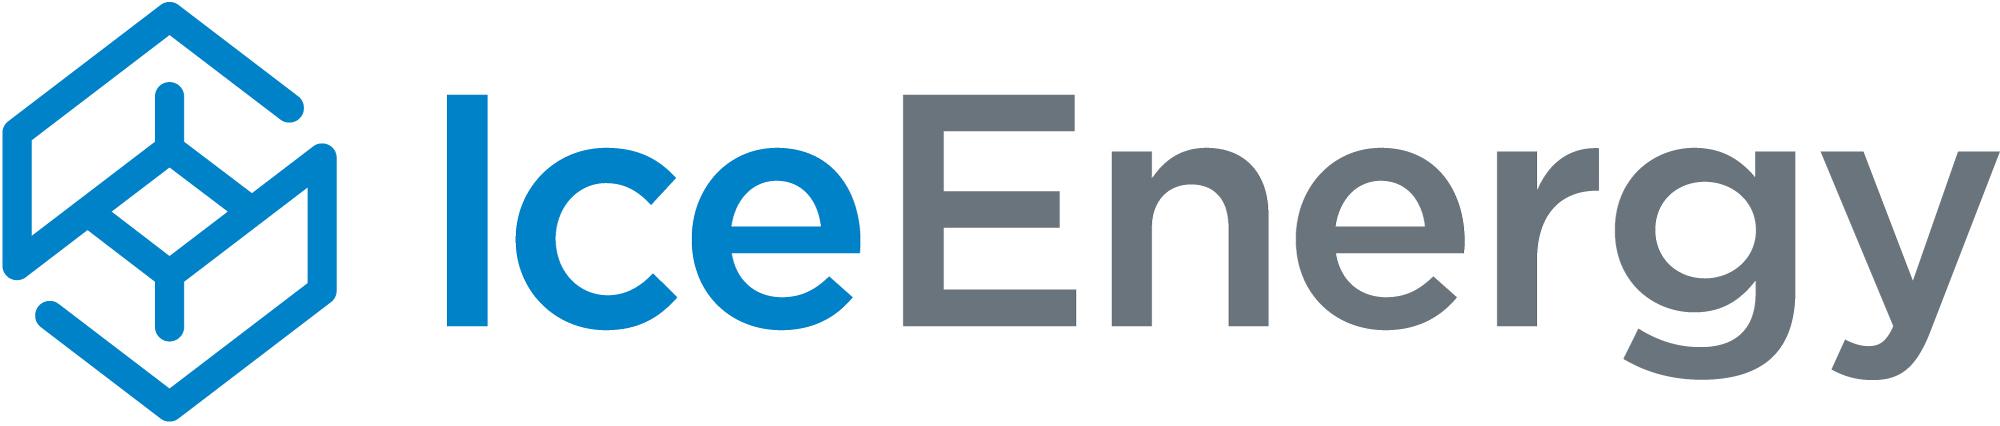 Ice Company Logo - News - Ice Energy - Ice Bear System Storage Solution